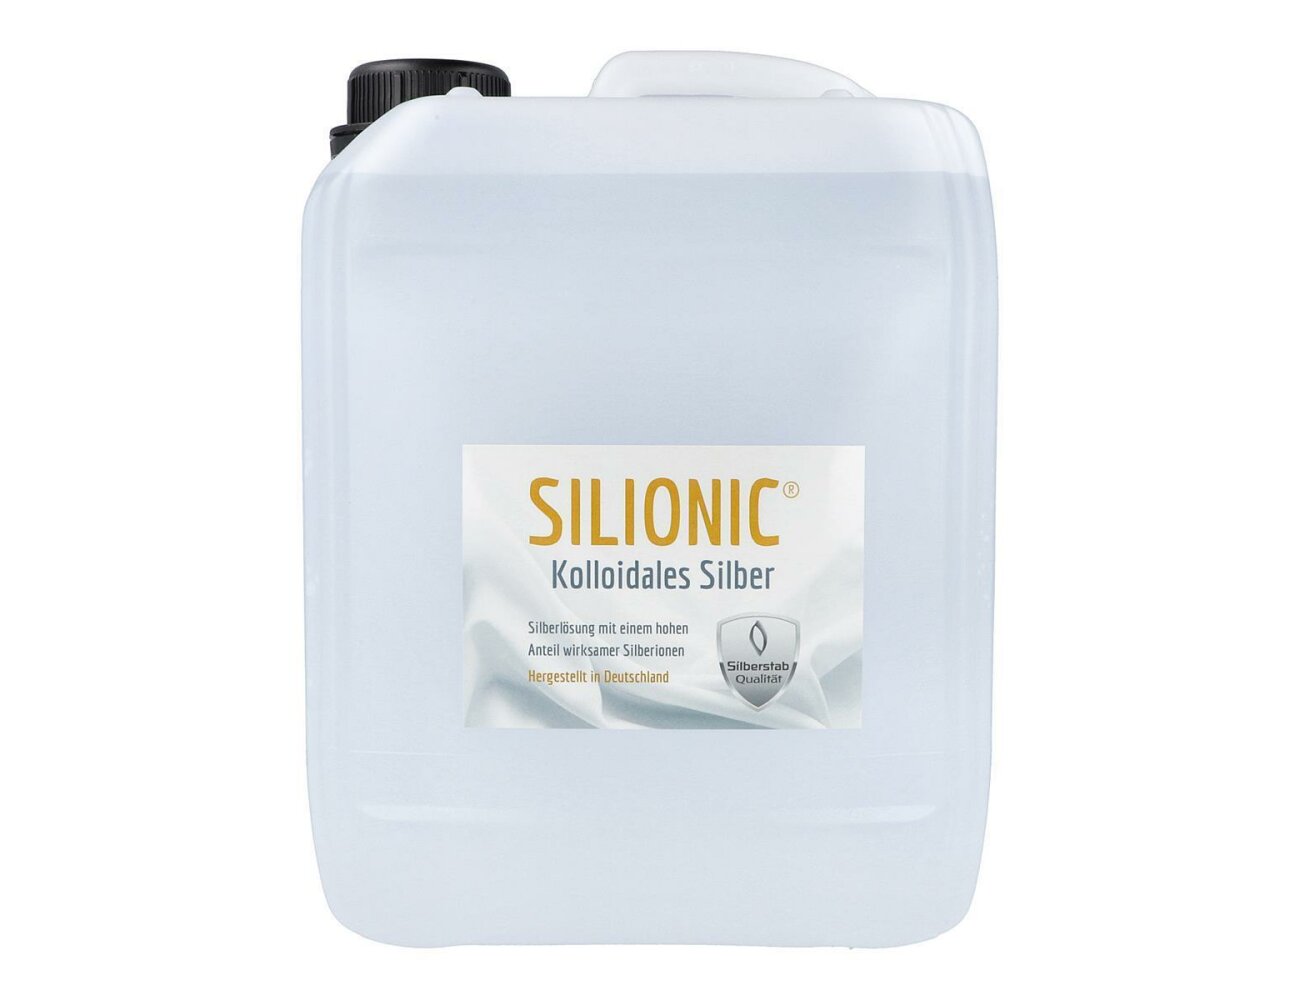 Silionic Kolloidales Silber, 50 ppm, 5 Liter